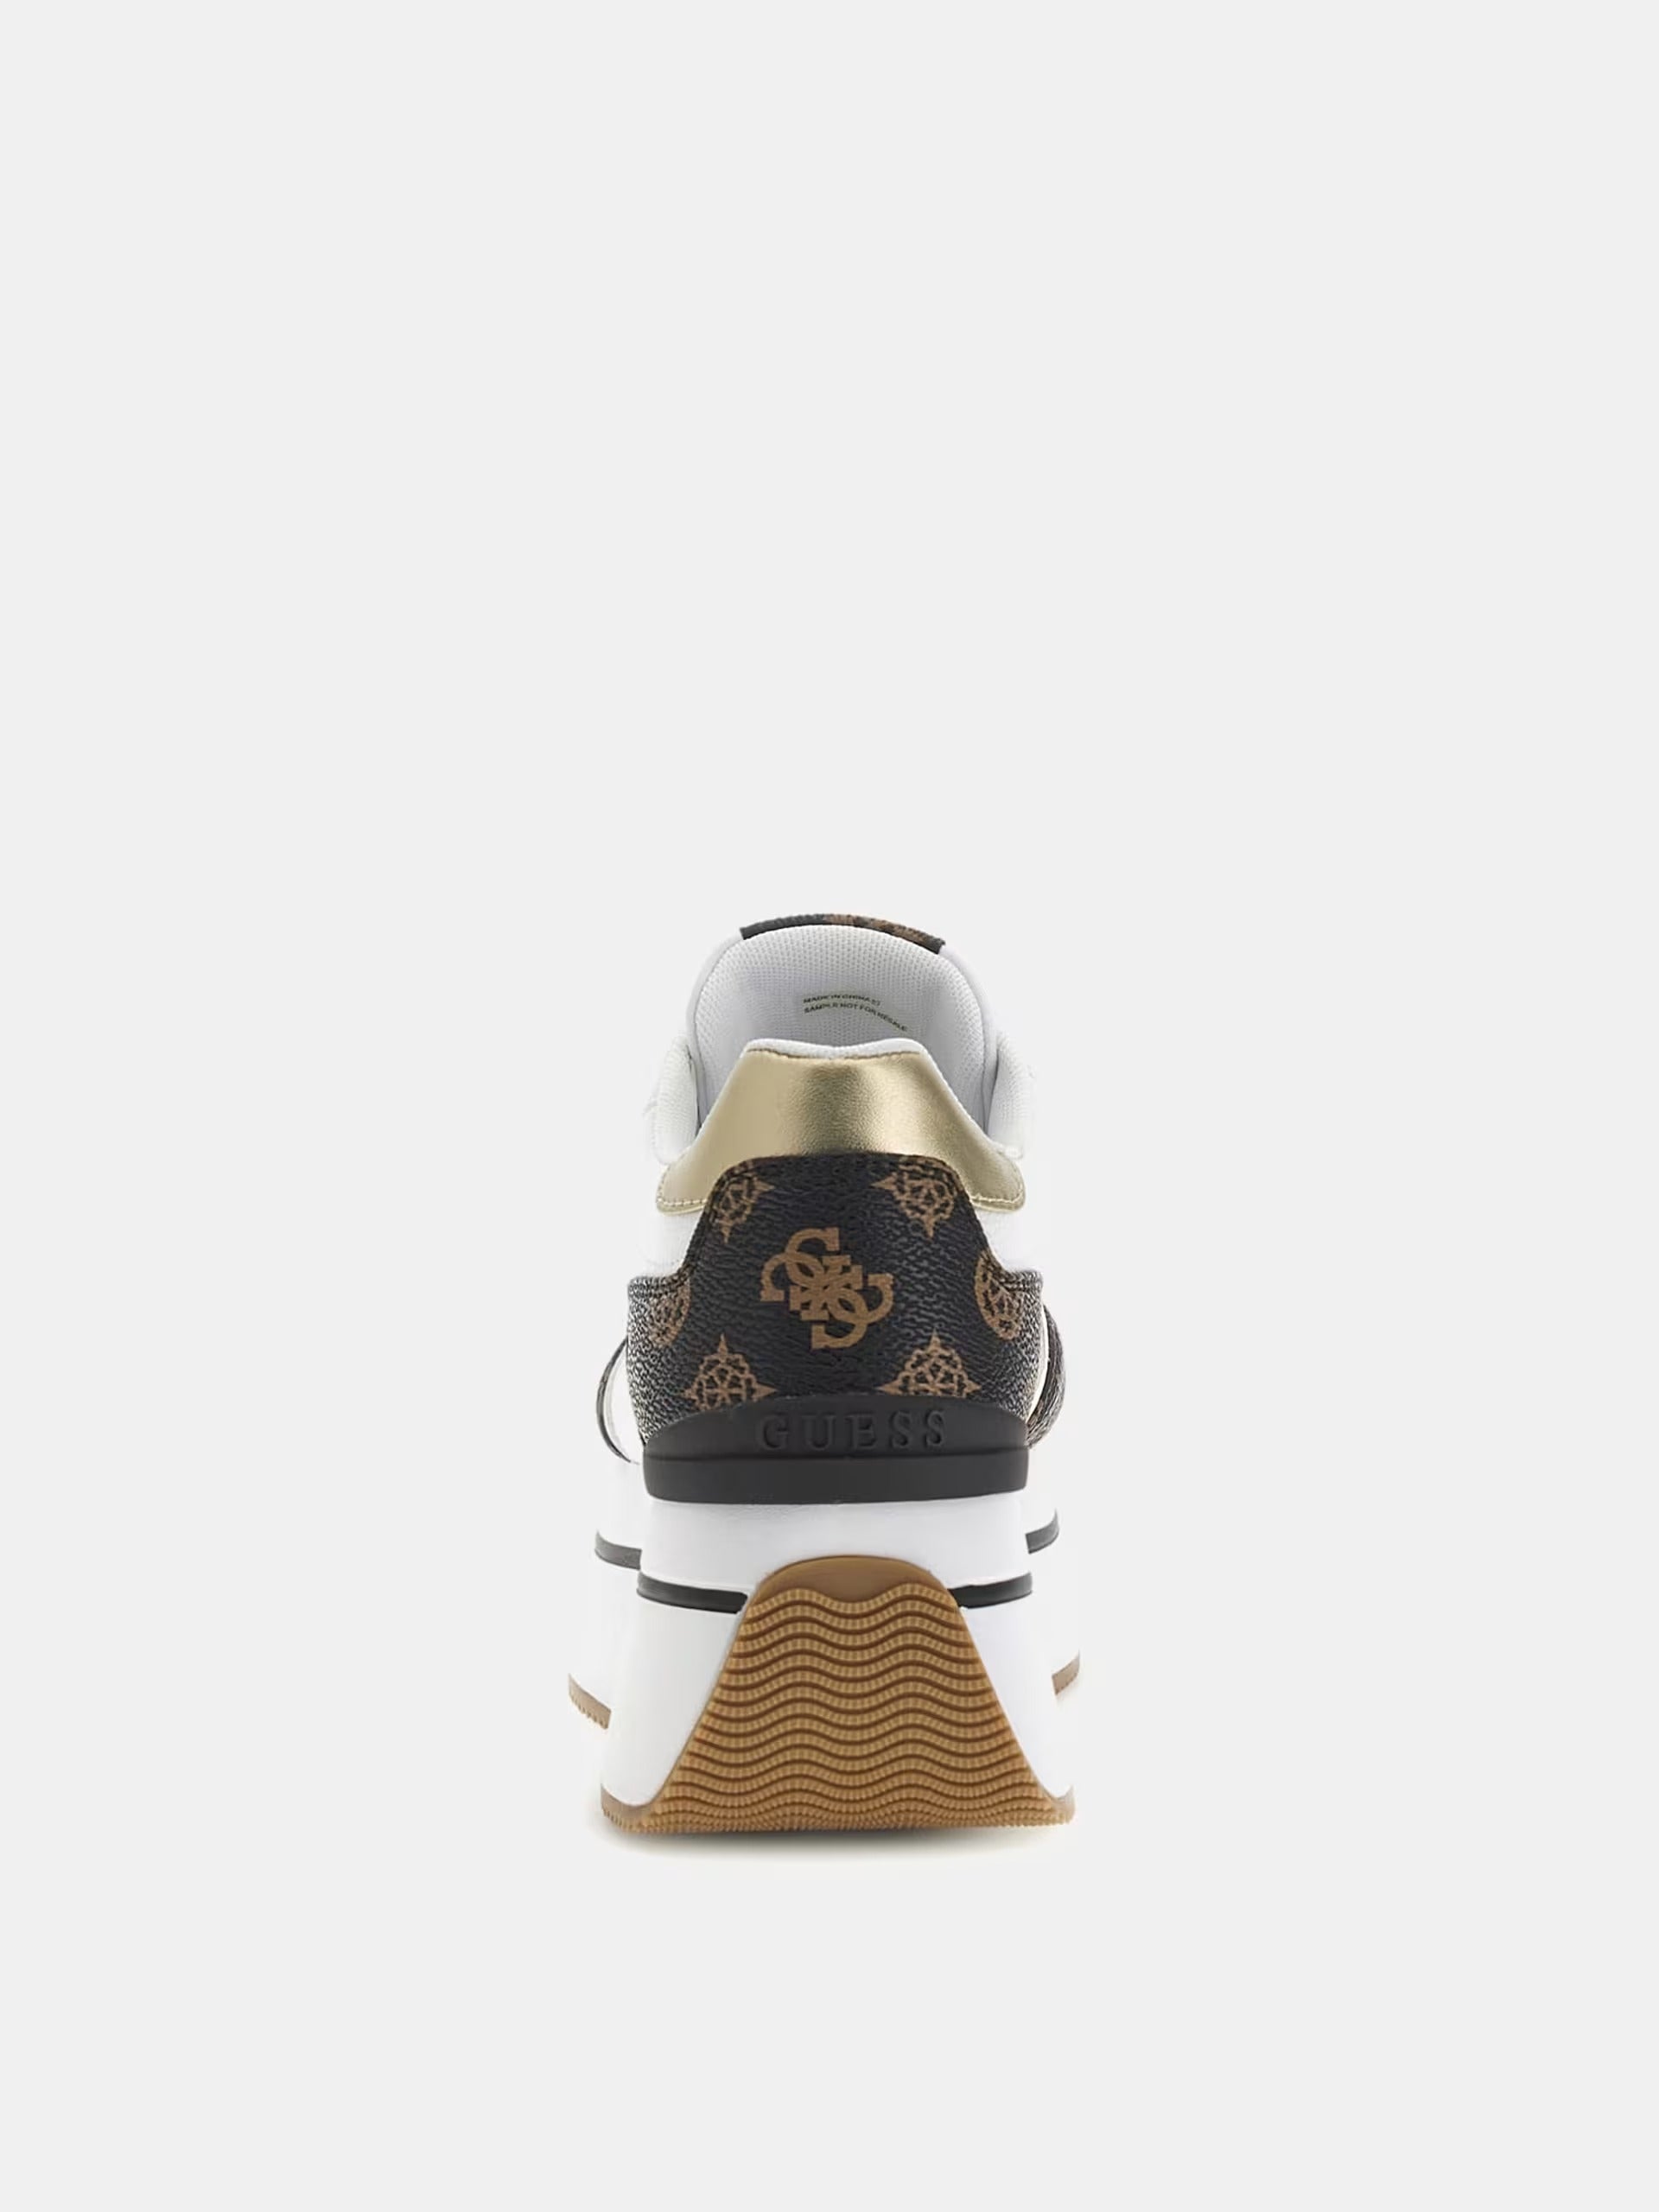 Guess FLPCM4FAL12 sneaker camrio 4g logo peony bianco multi